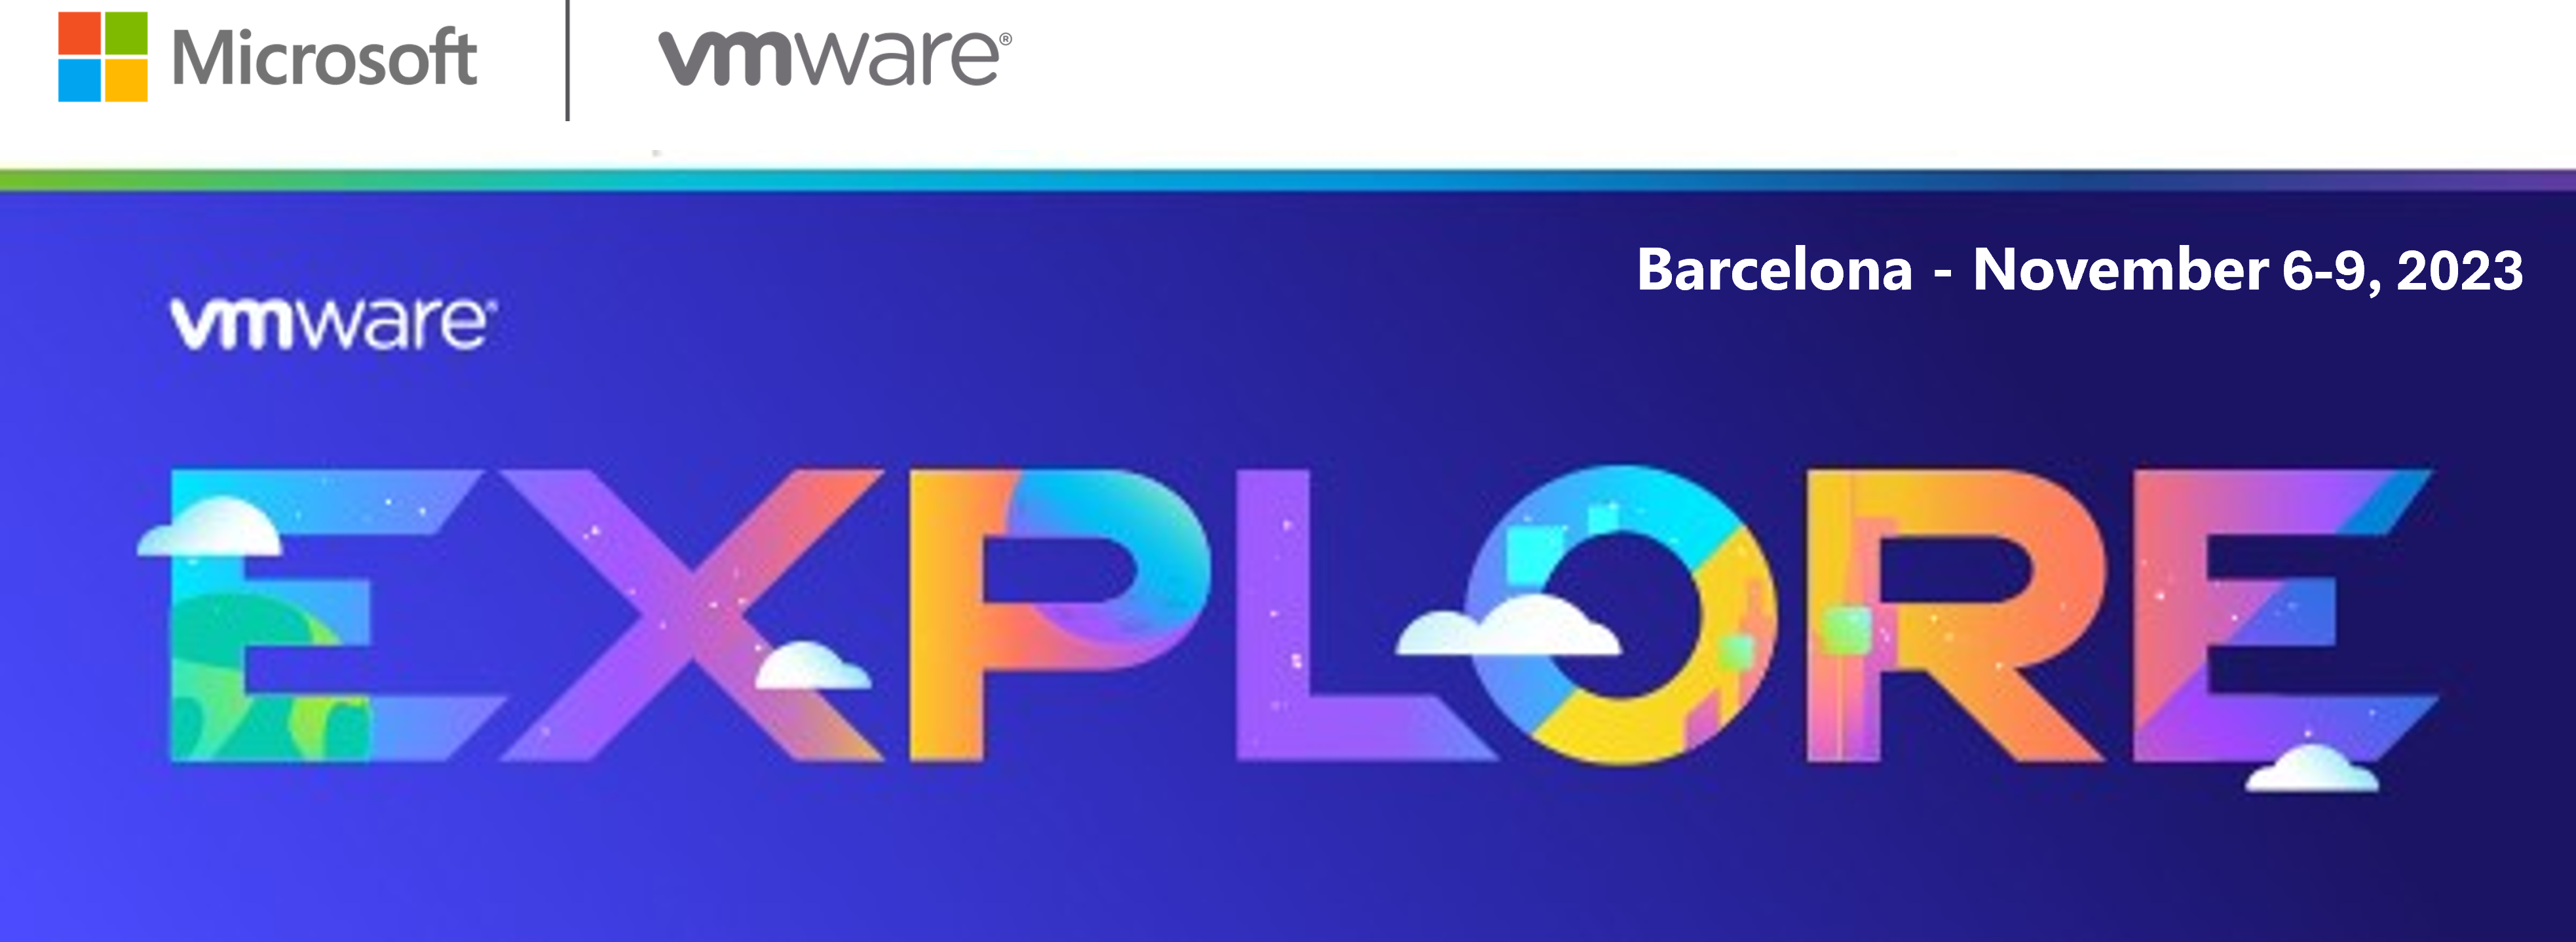 Microsoft is headed to VMware Explore 2023 in Barcelona